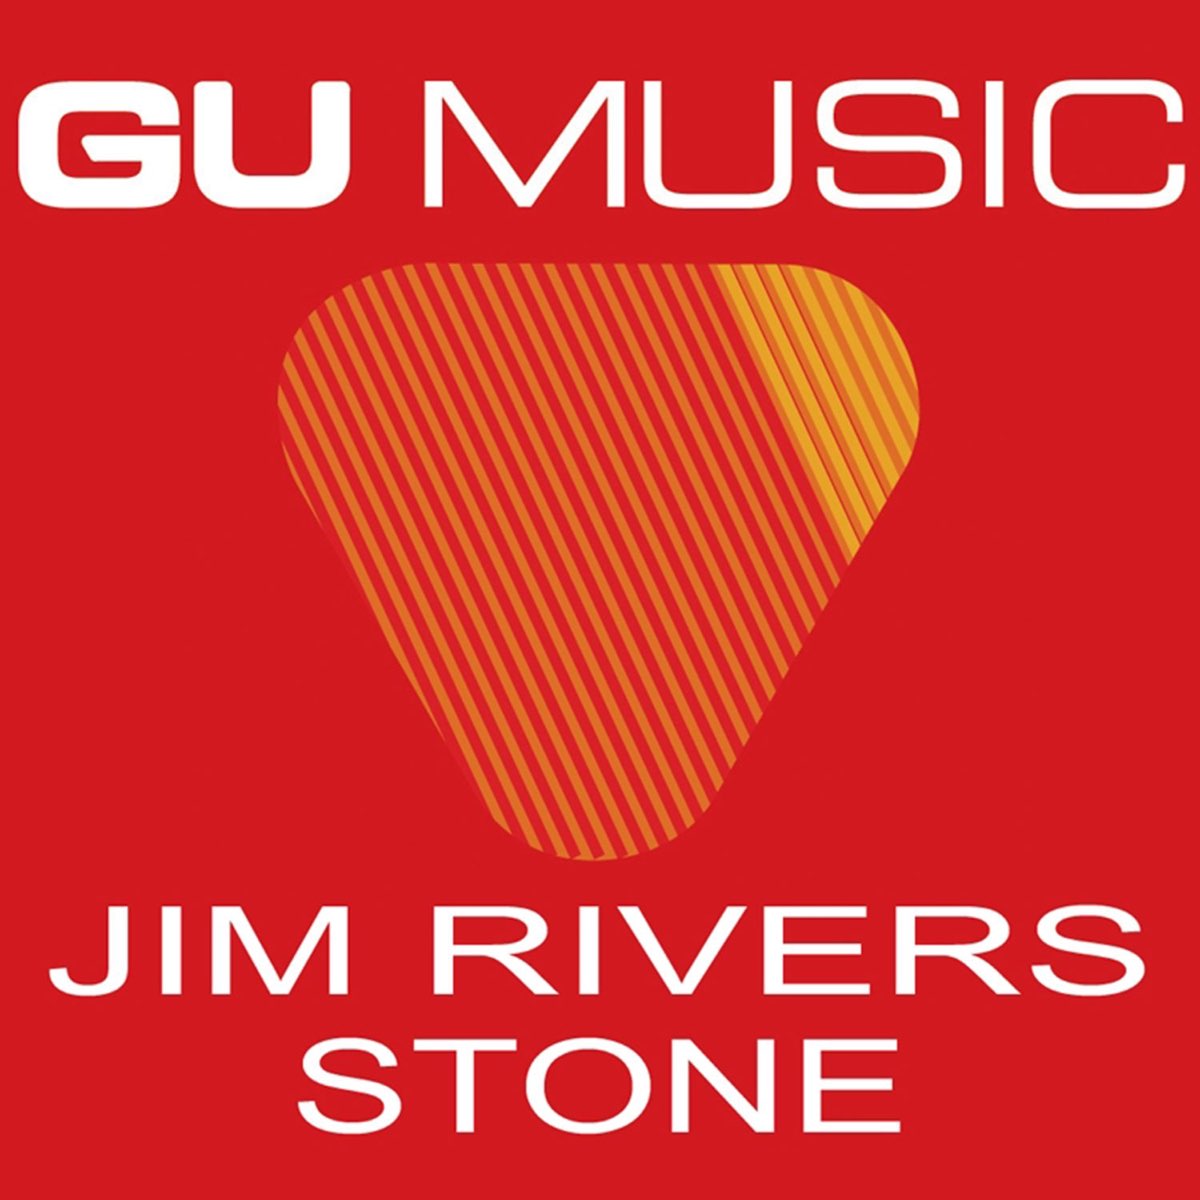 Jim Rivers. James Stone. Jim Rivers – Cosmos. Jim River Supplies. Стоун музыка